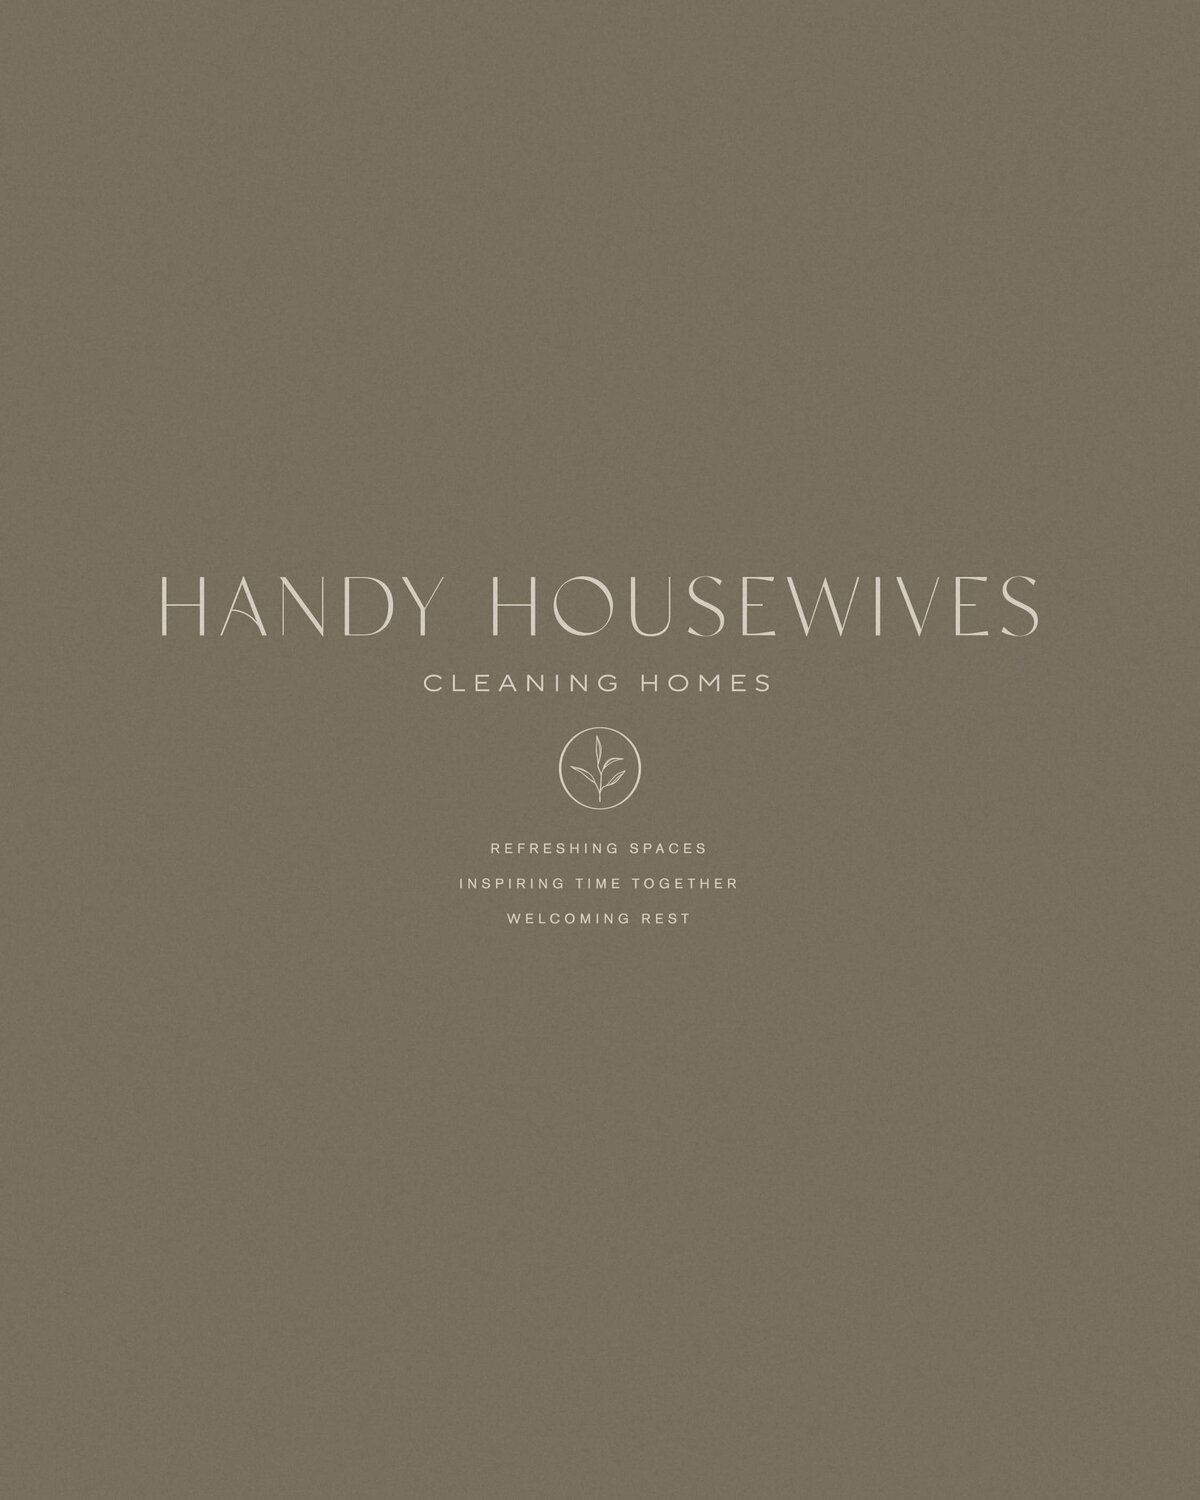 HandyHousewives_LaunchGraphics_Instagram6